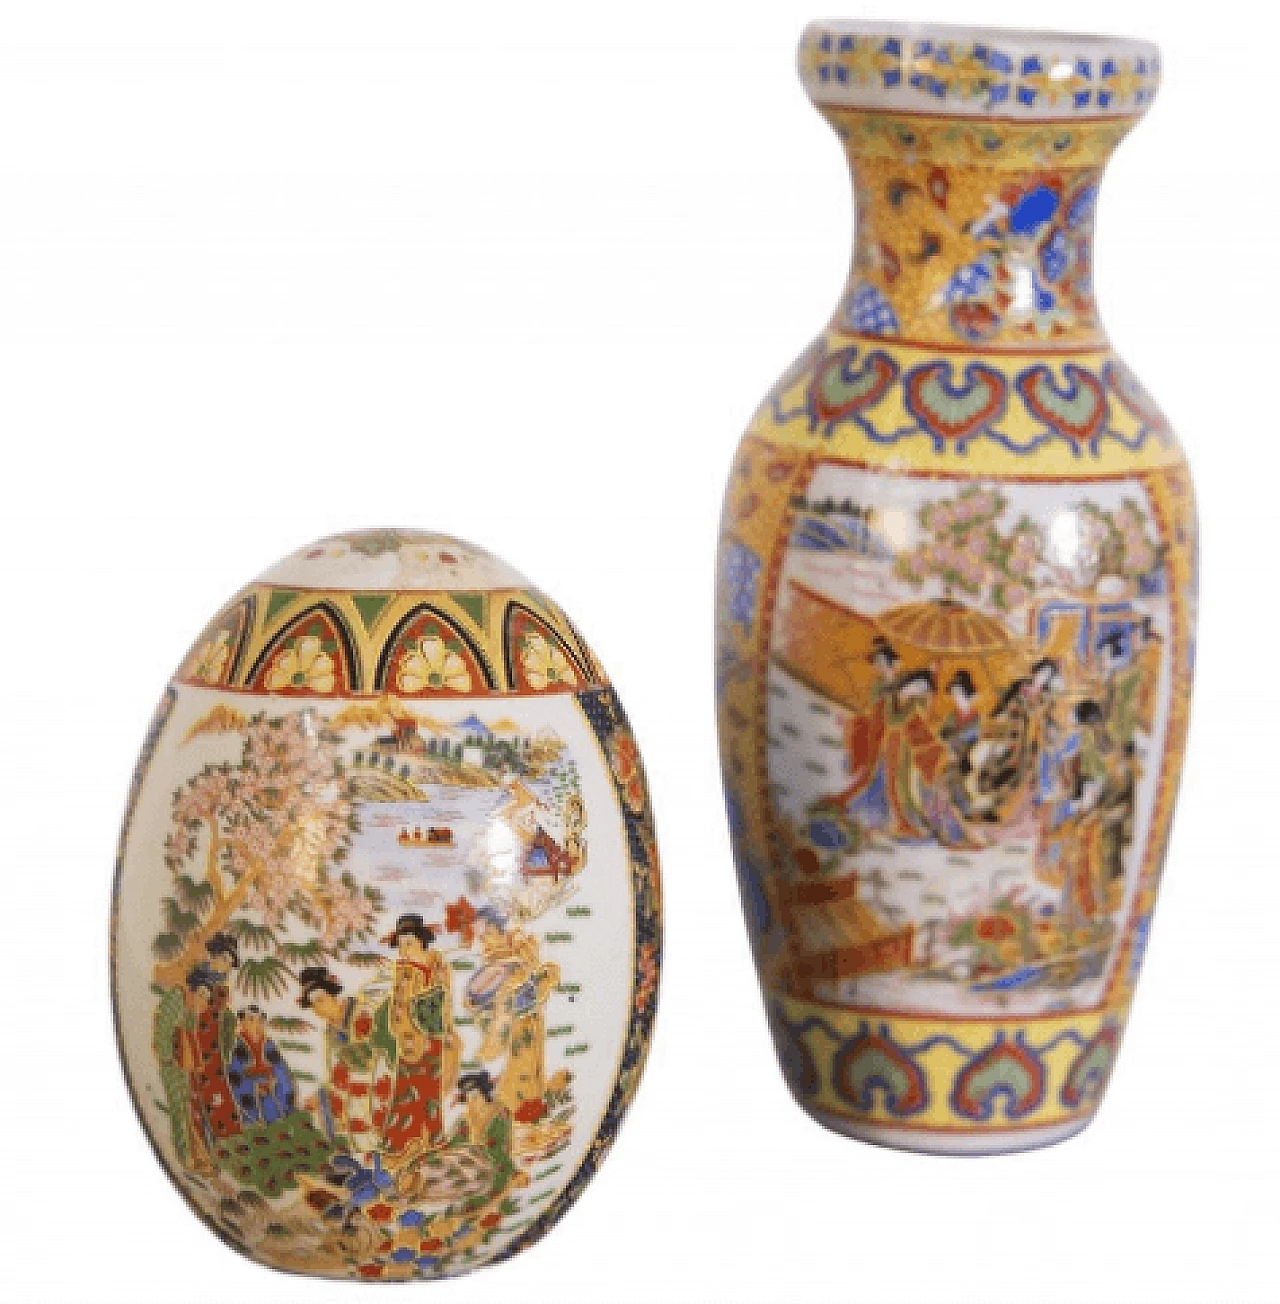 Vaso e uovo cinesi in porcellana dipinta, inizio '900 1